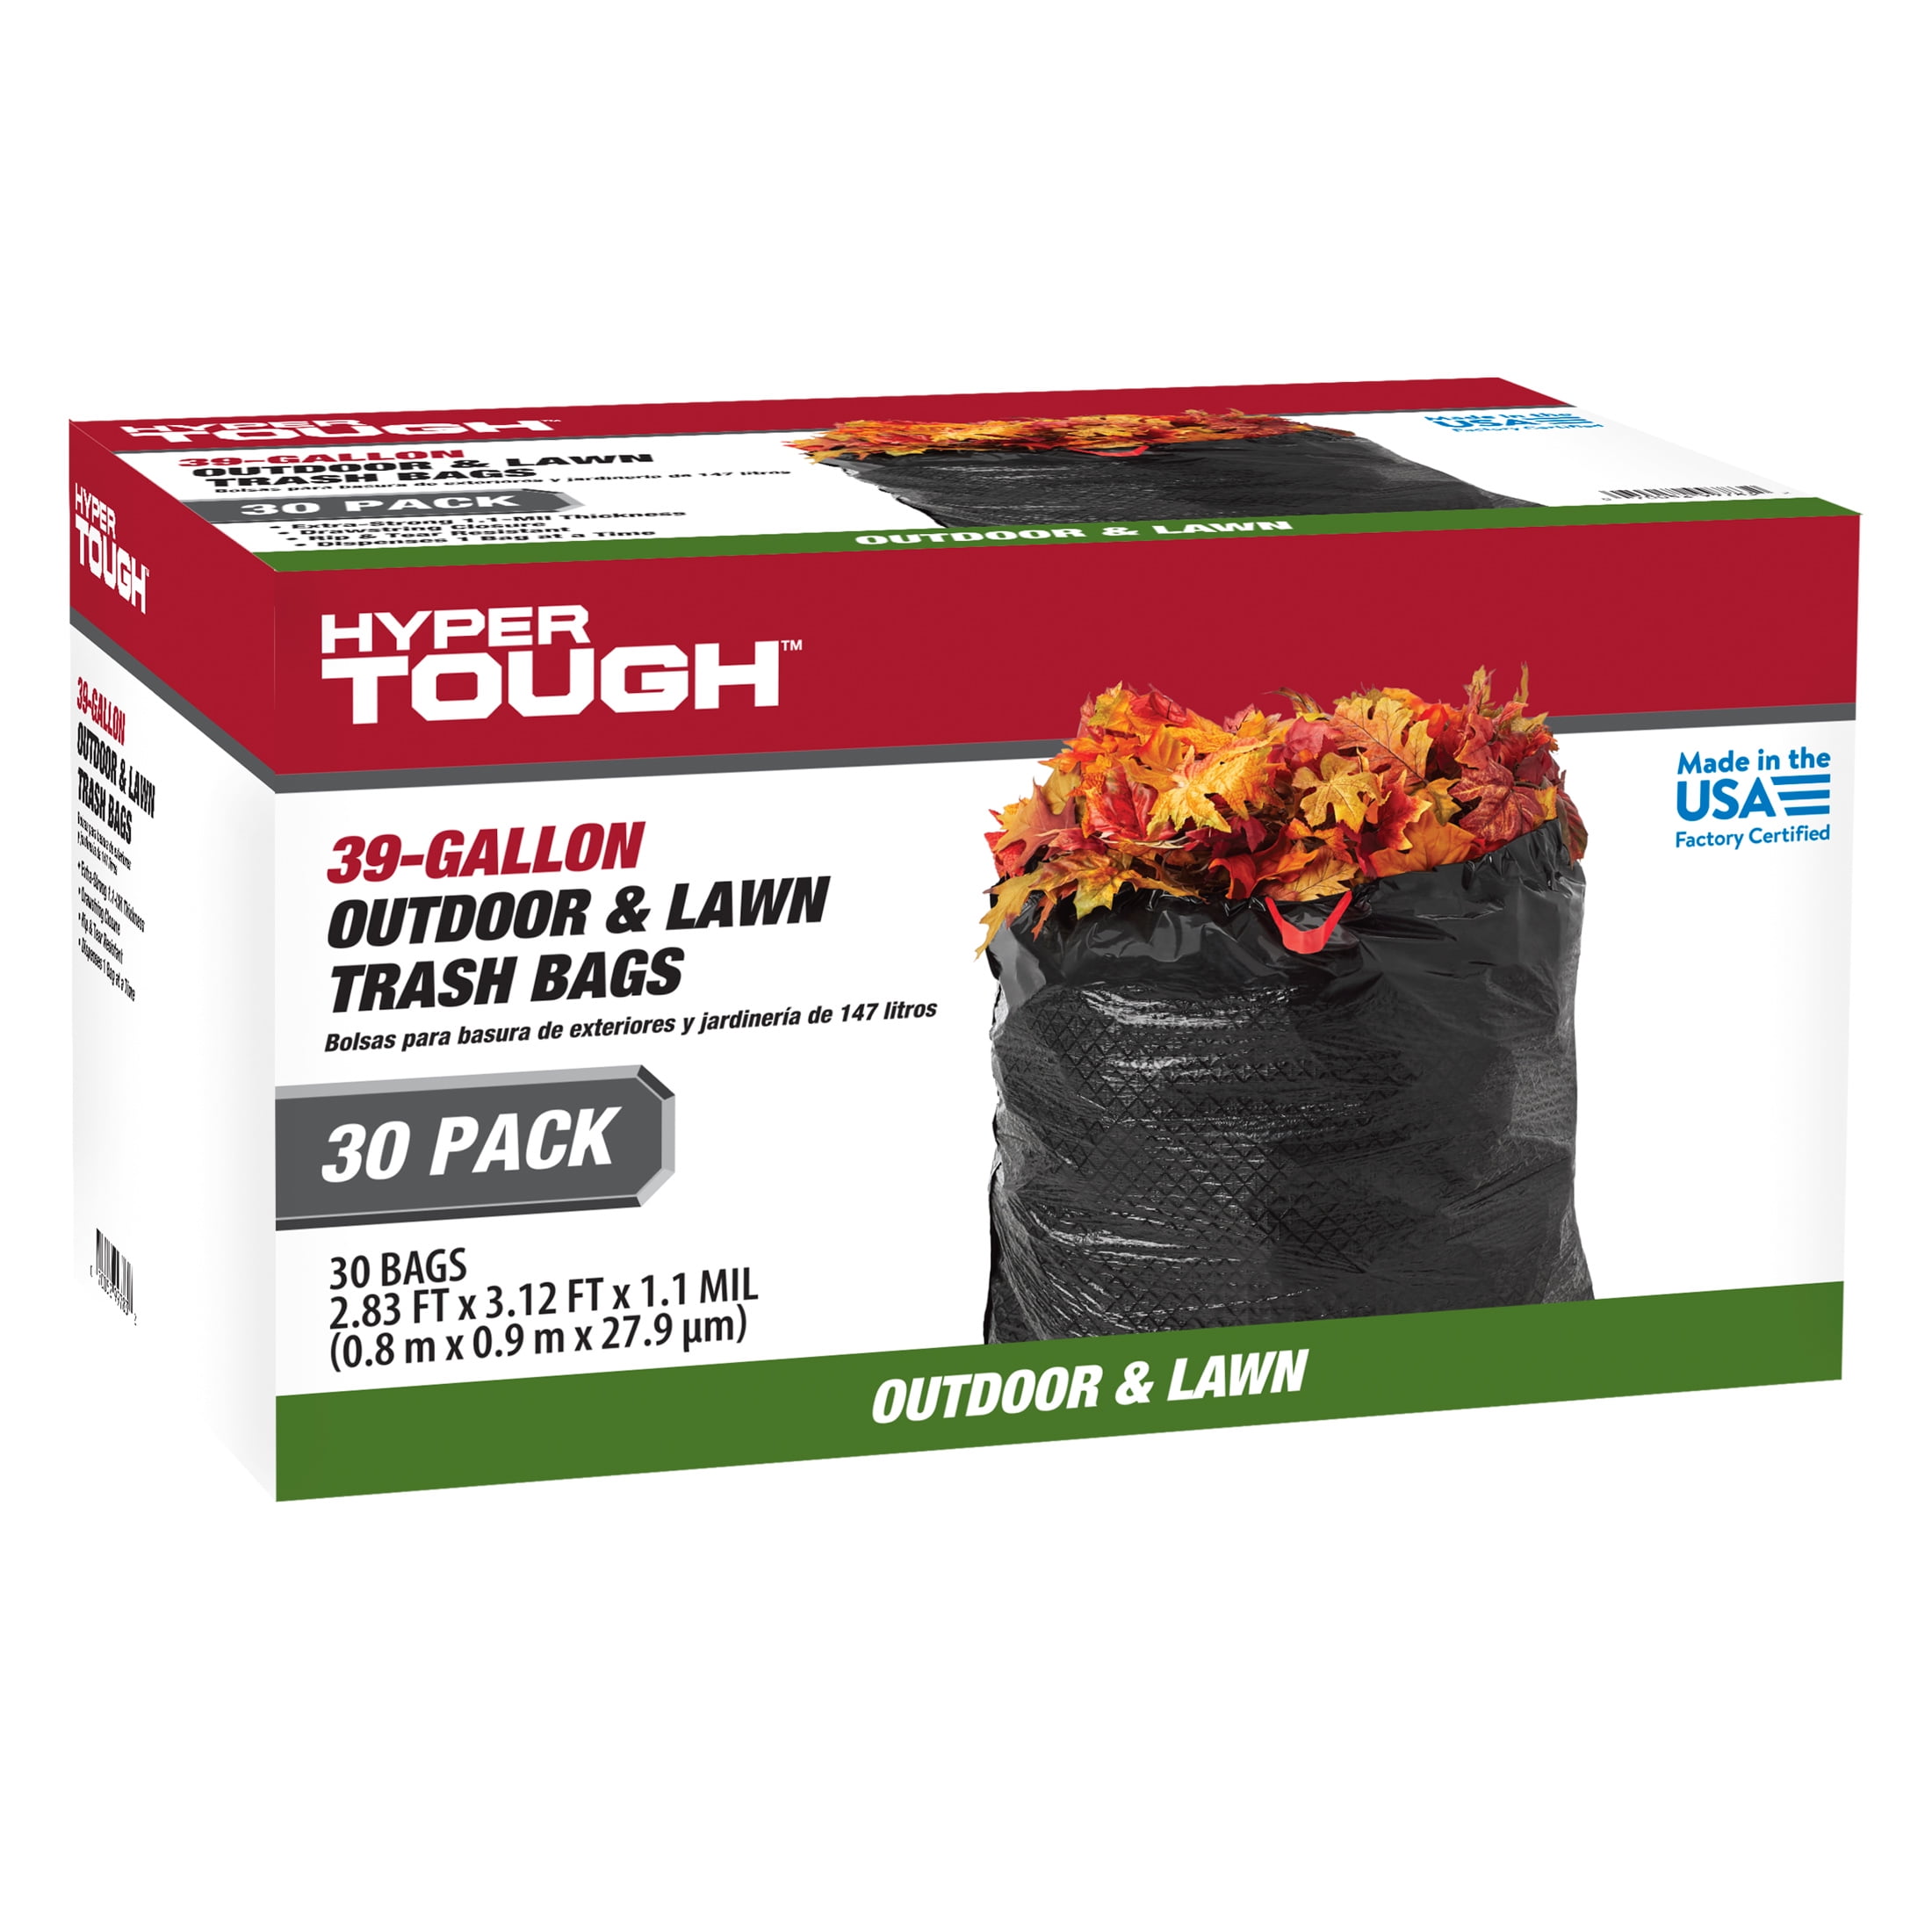 Hyper Tough 39-Gallon Drawstring Outdoor & Lawn Trash Bags, 1.1 MIL, 30  Bags 